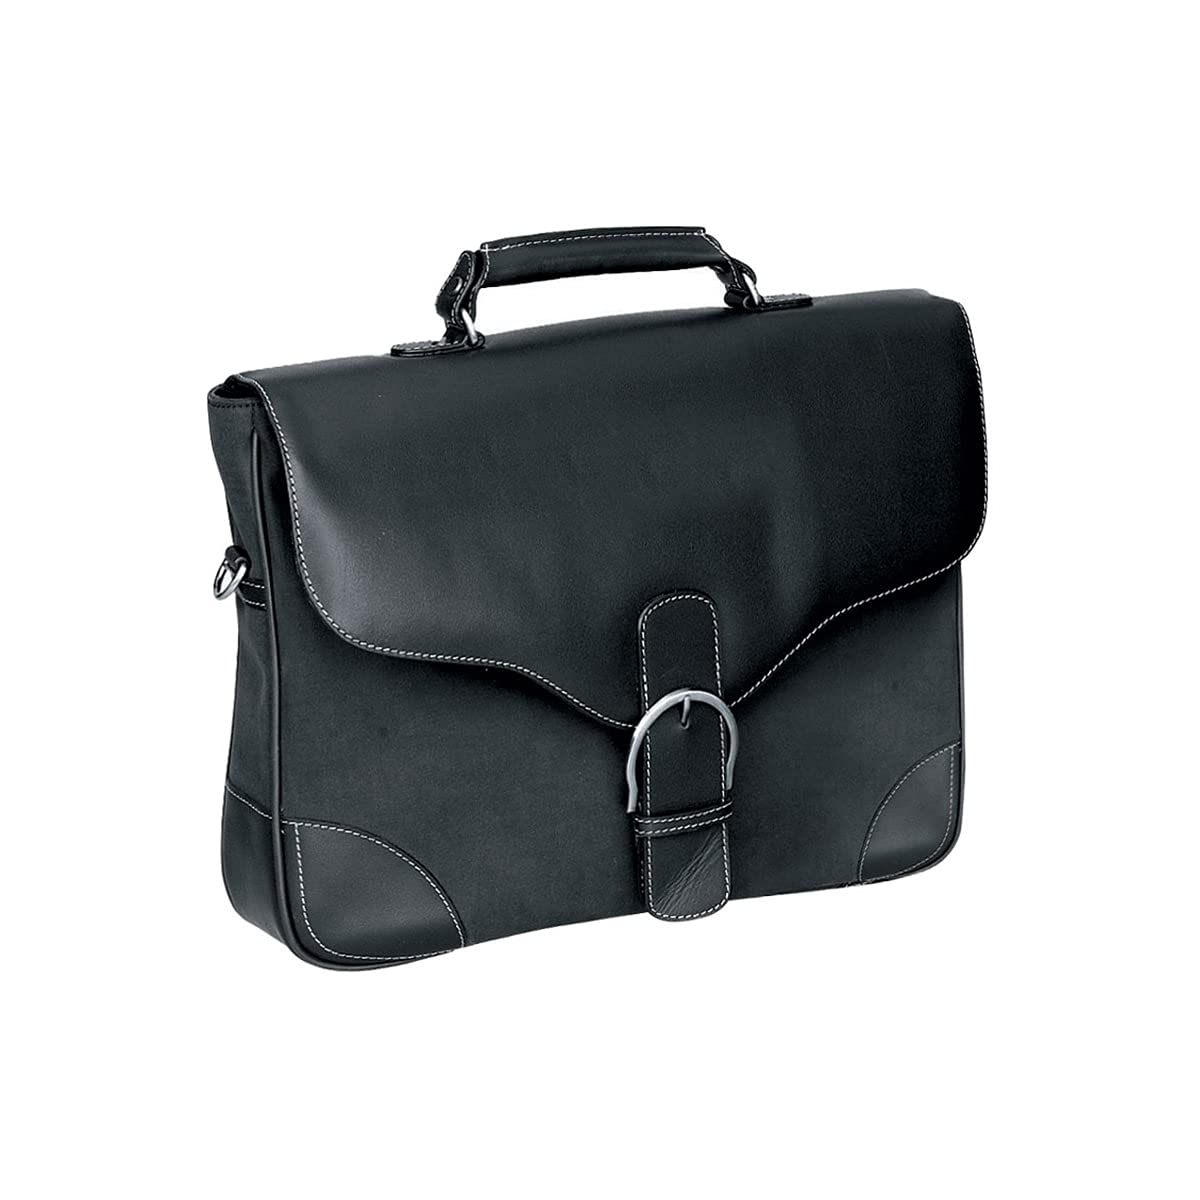 Goodhope Bellino Diplomat Black Leather/Fabric Messenger Bag